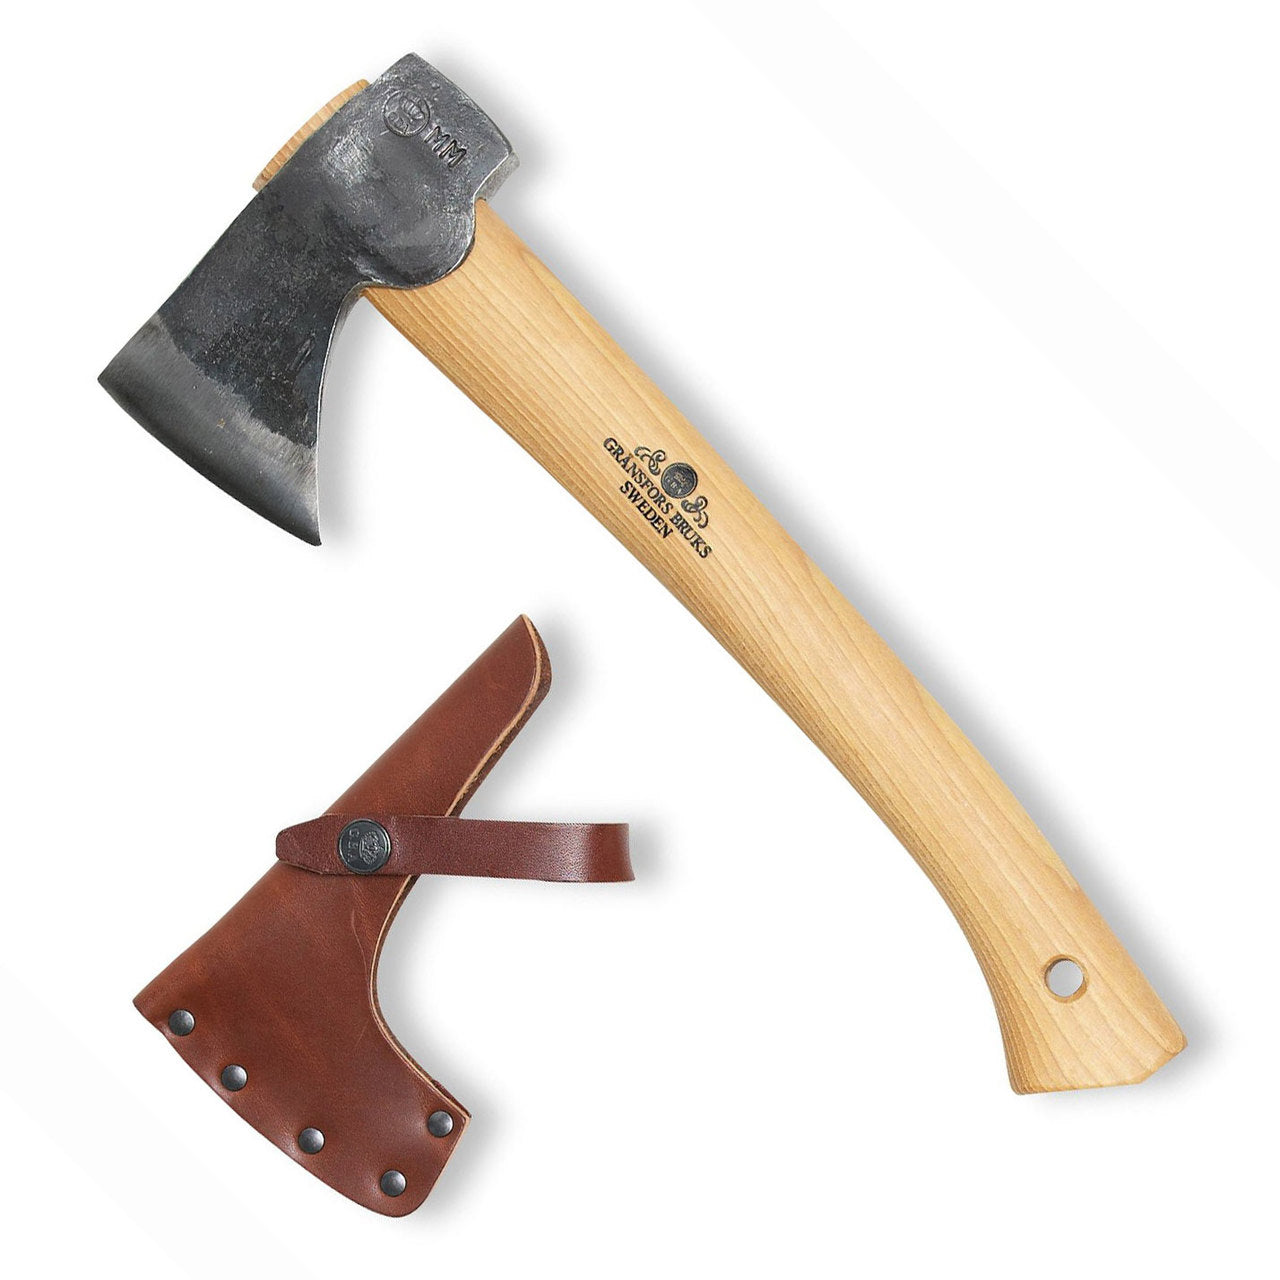 Axe Wax - Good Deals, Gransfors Bruk  Log Home Store Building Supplies and  Tools